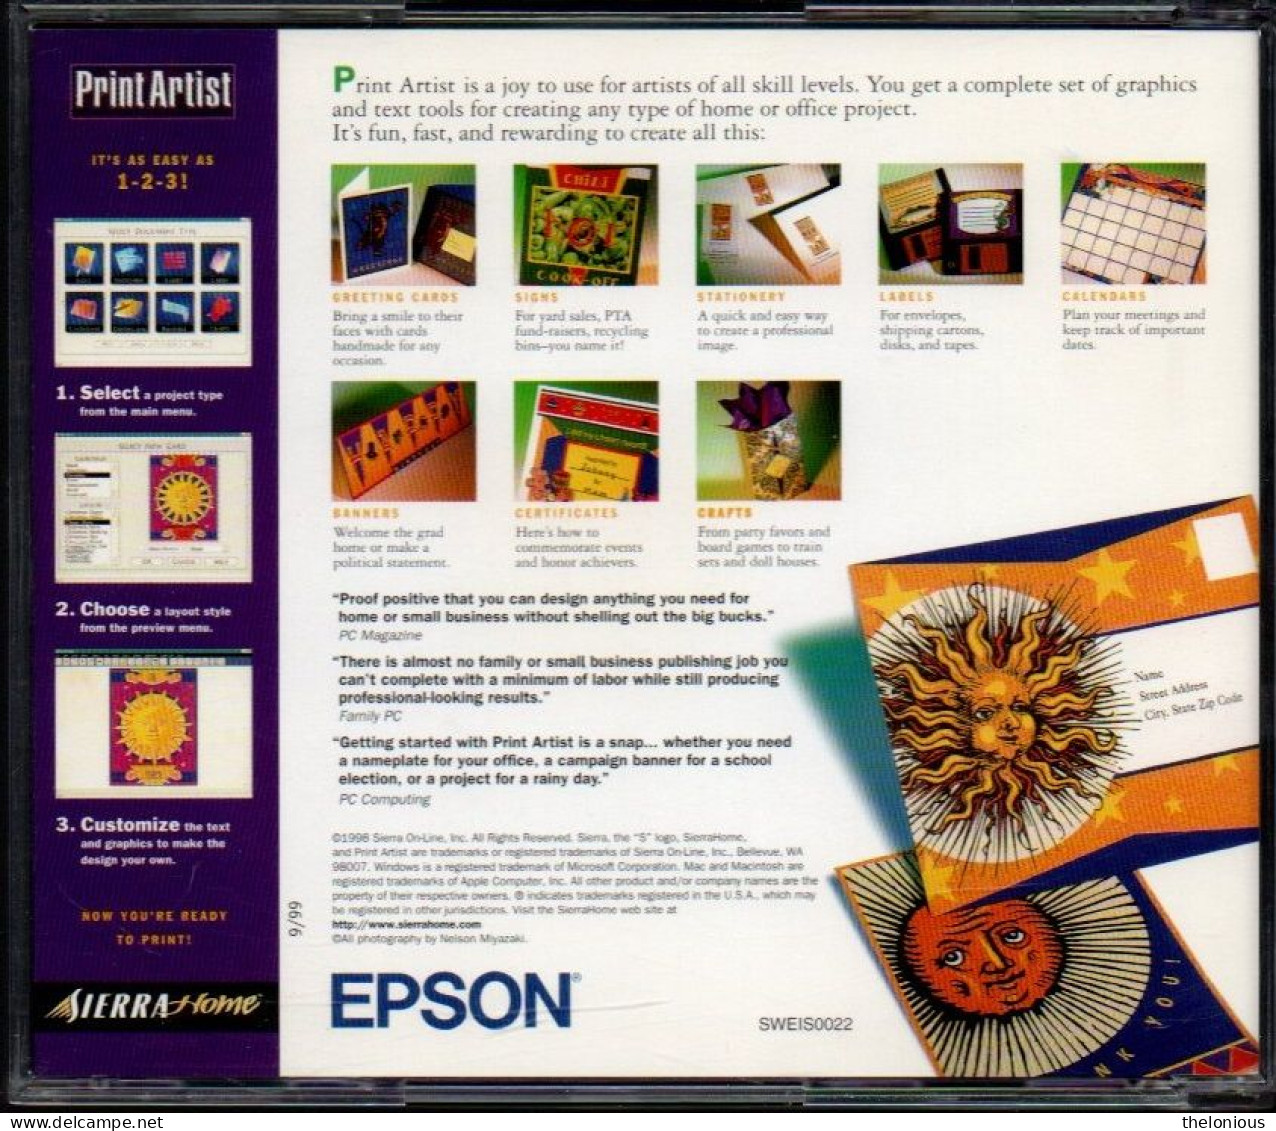 # CD ROM Print Artist 4.0 Italiano/English - EPSON - Sierra Ultra Pinball - Otros